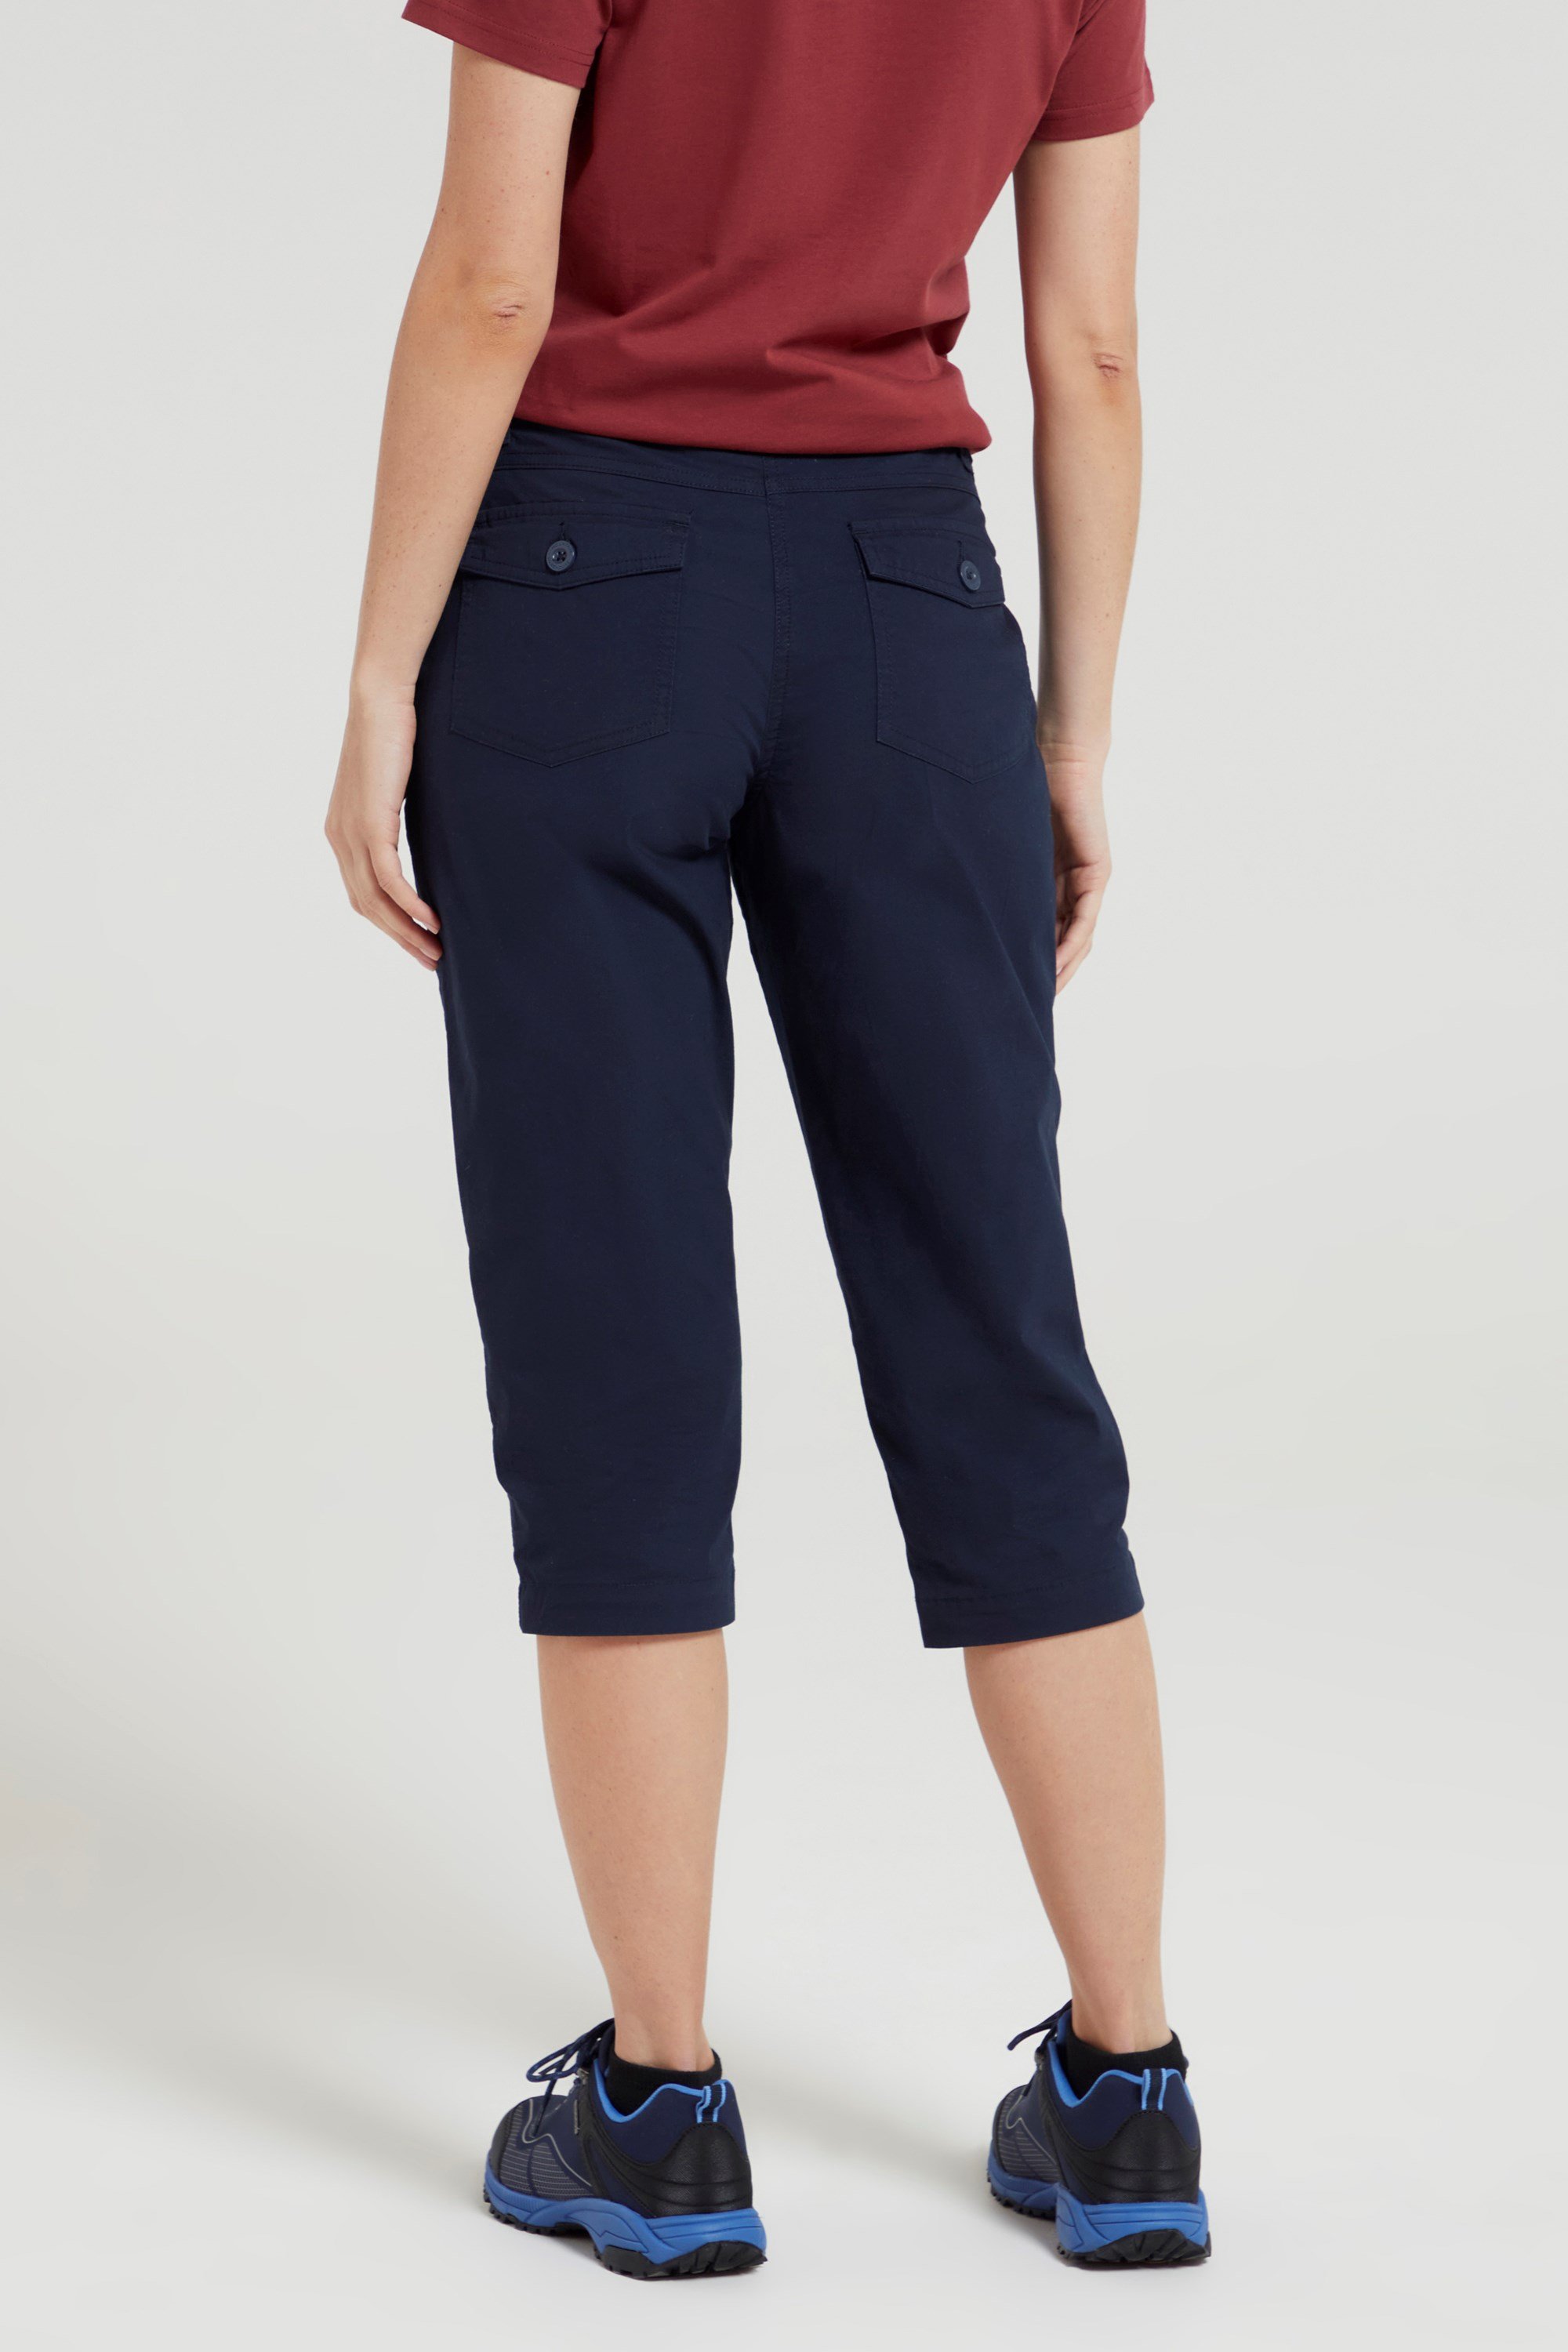 Mountain Hardwear Mirada Capri - Women's-Khaki-6 — Womens Clothing Size: 6  US, Inseam Size: 18 in, Short Style: Capris, Apparel Fit: Regular —  1648321297-6-18